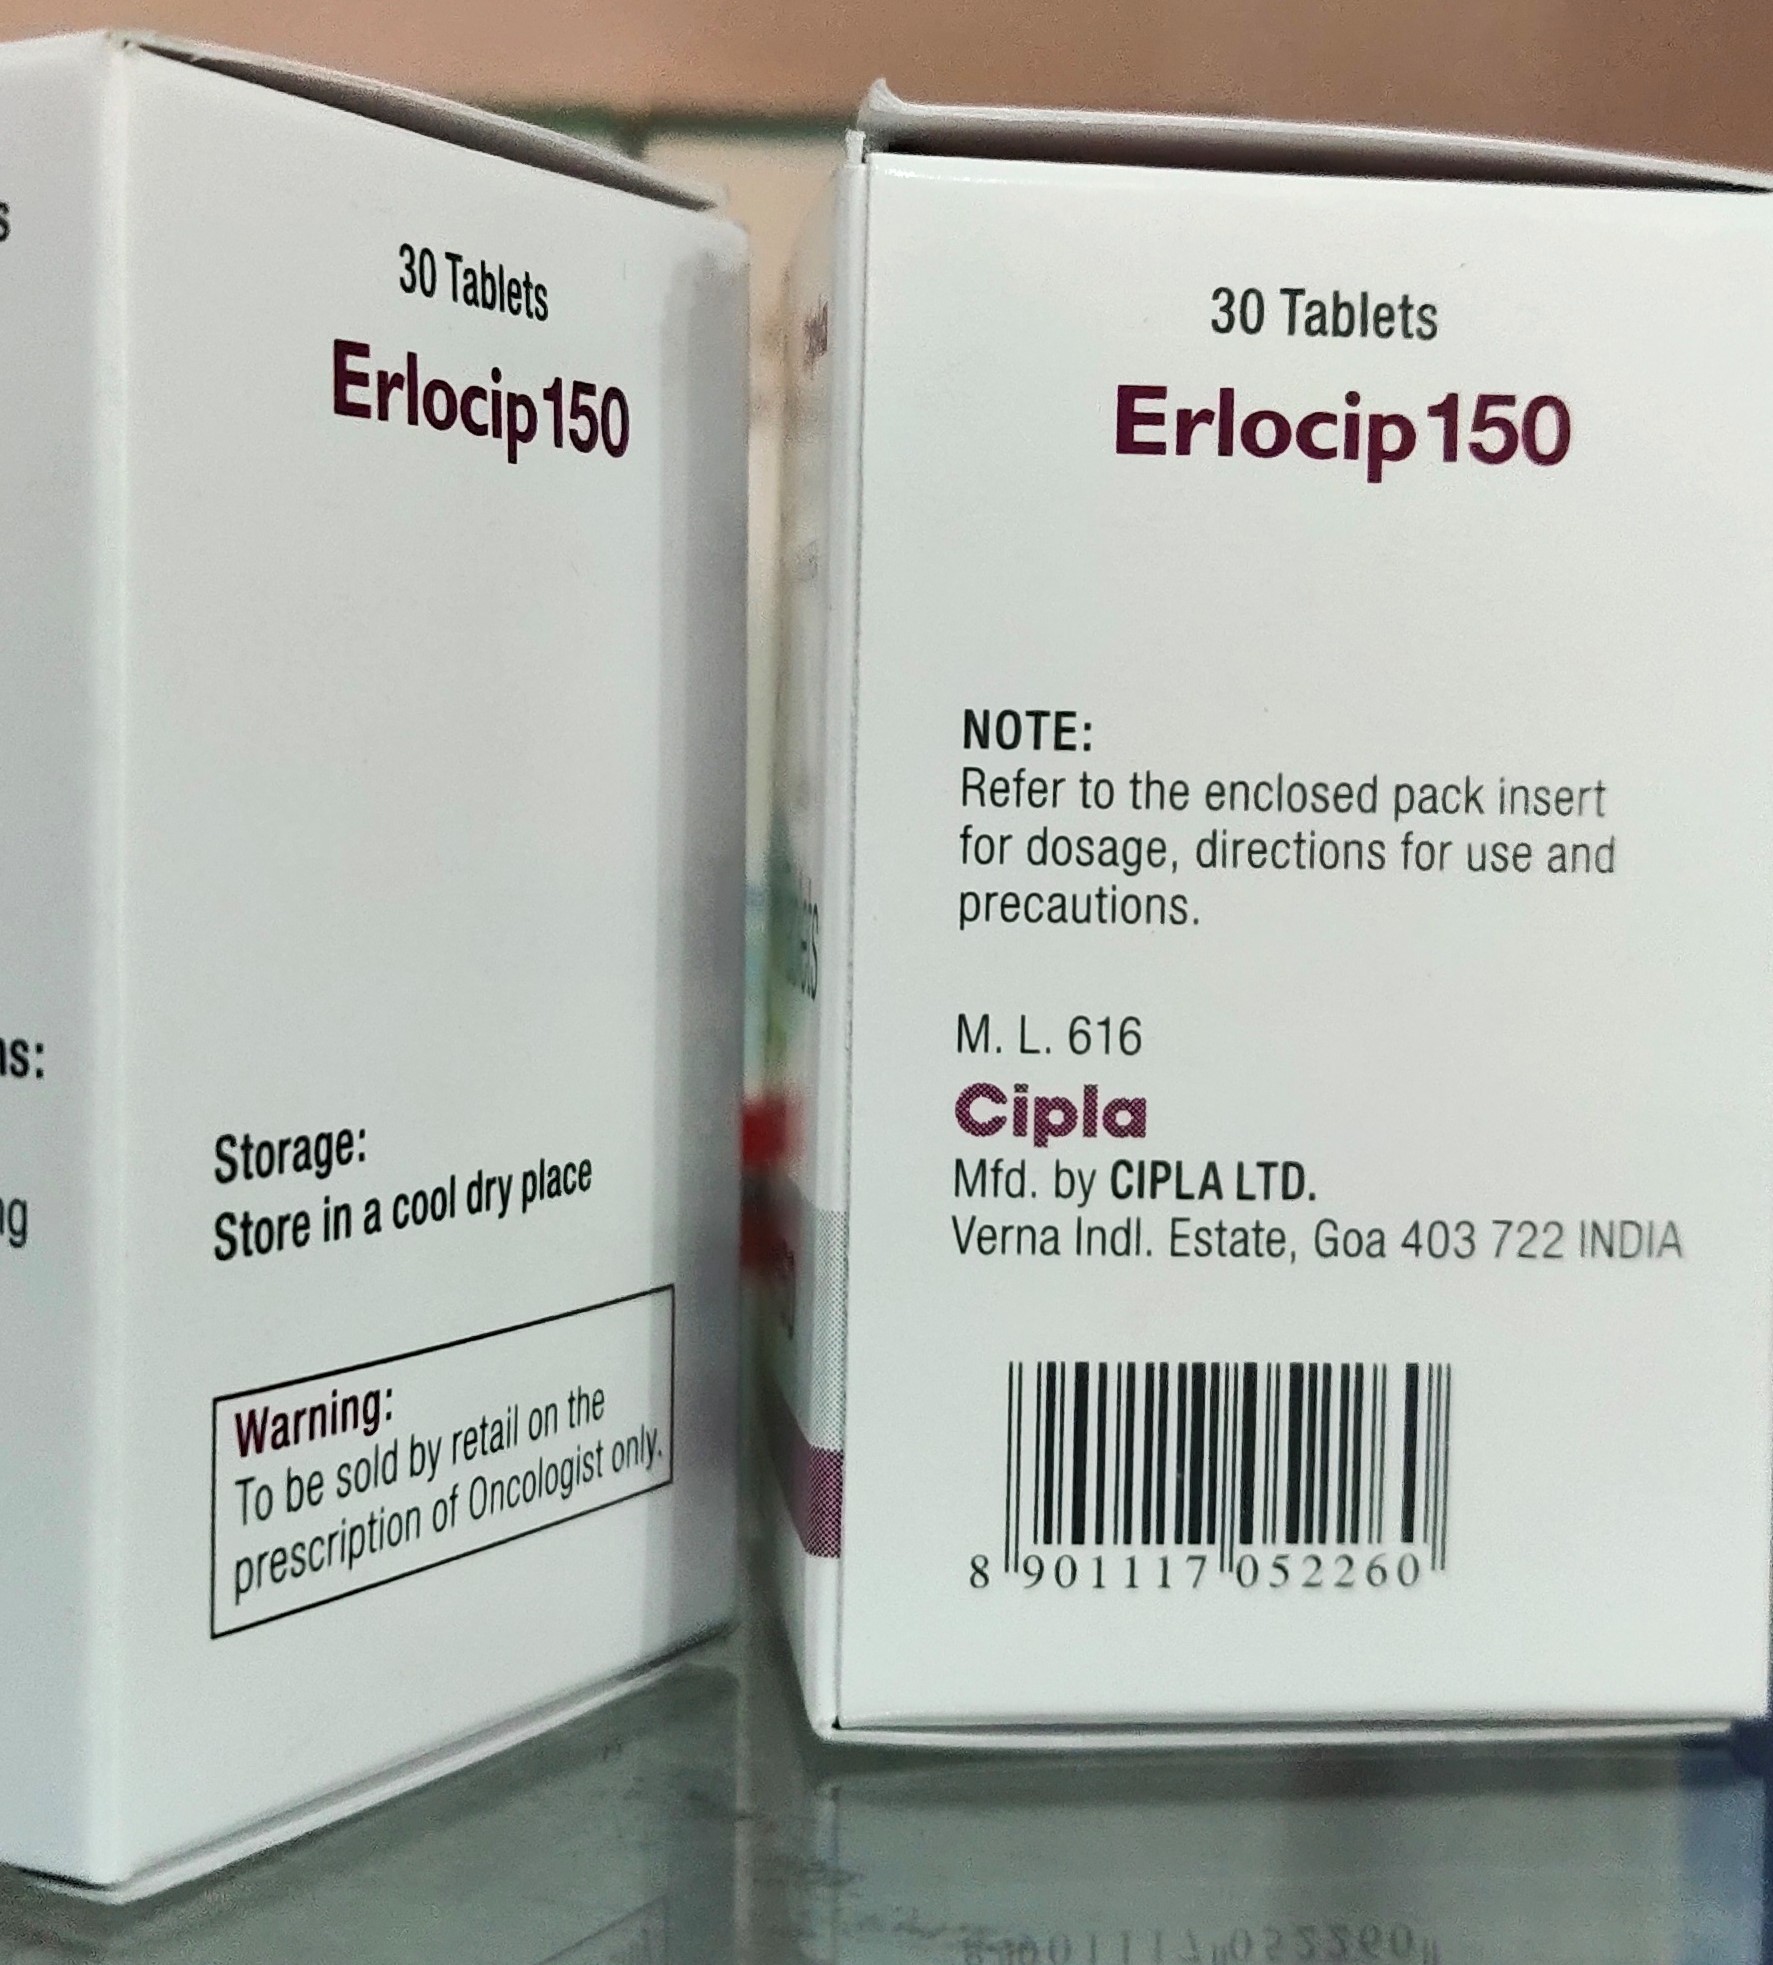 Erlotinib Tablets IP 150 Mg